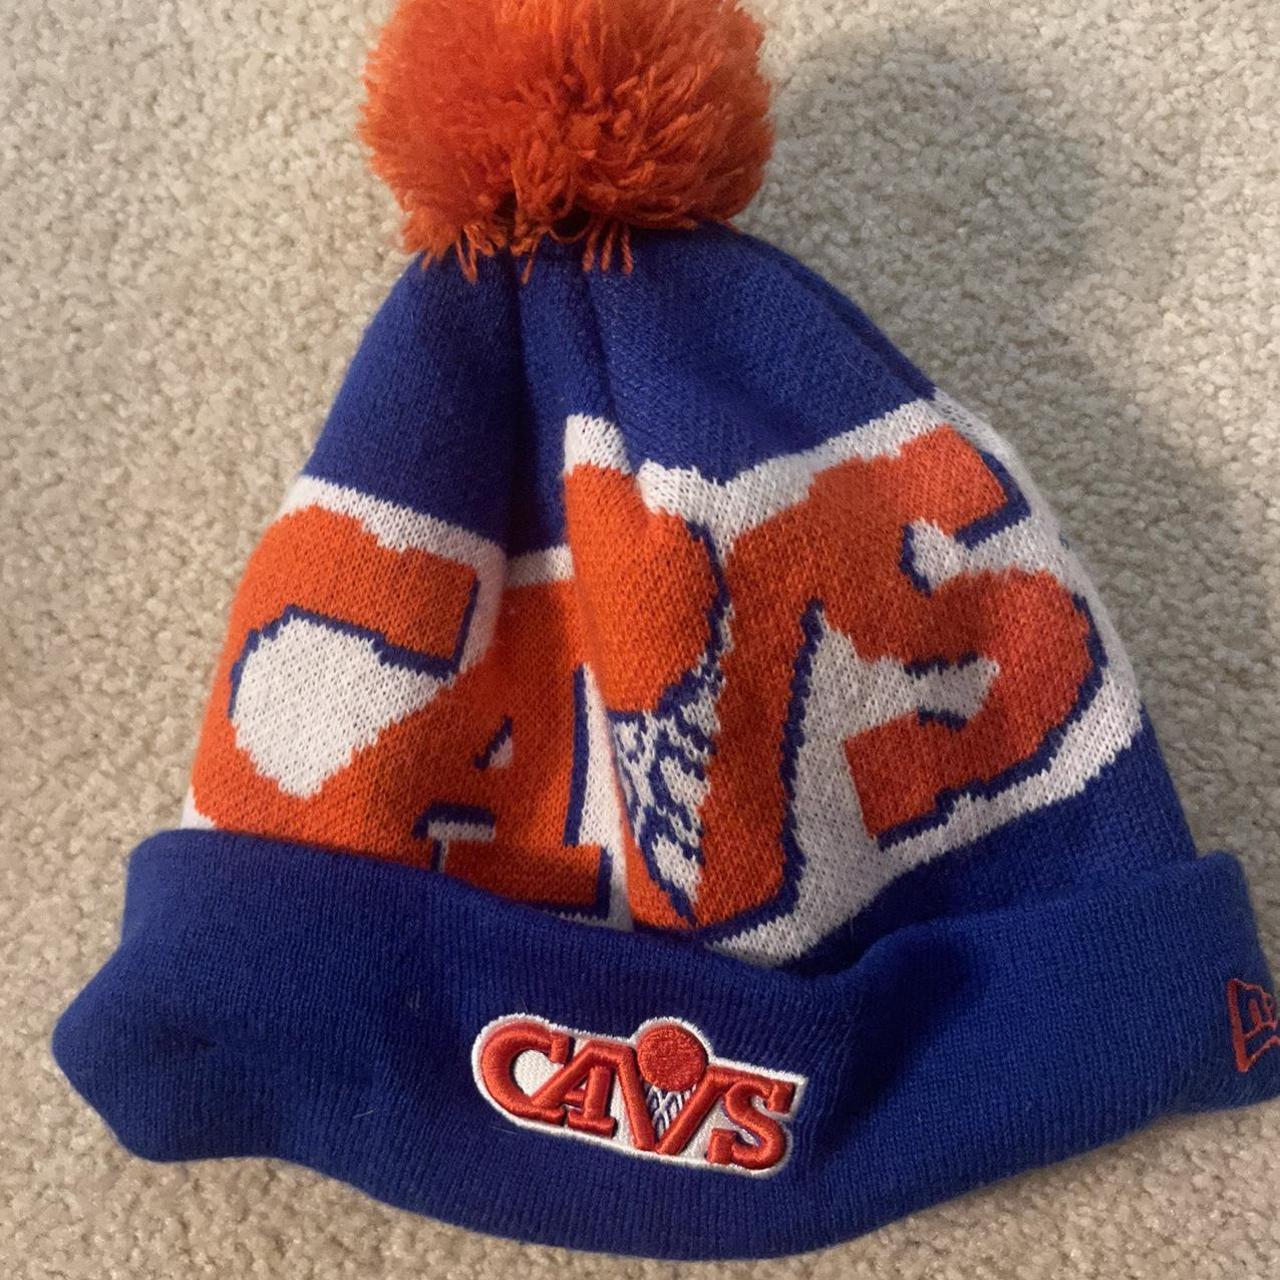 Cleveland Cavaliers New Era Knit Hat